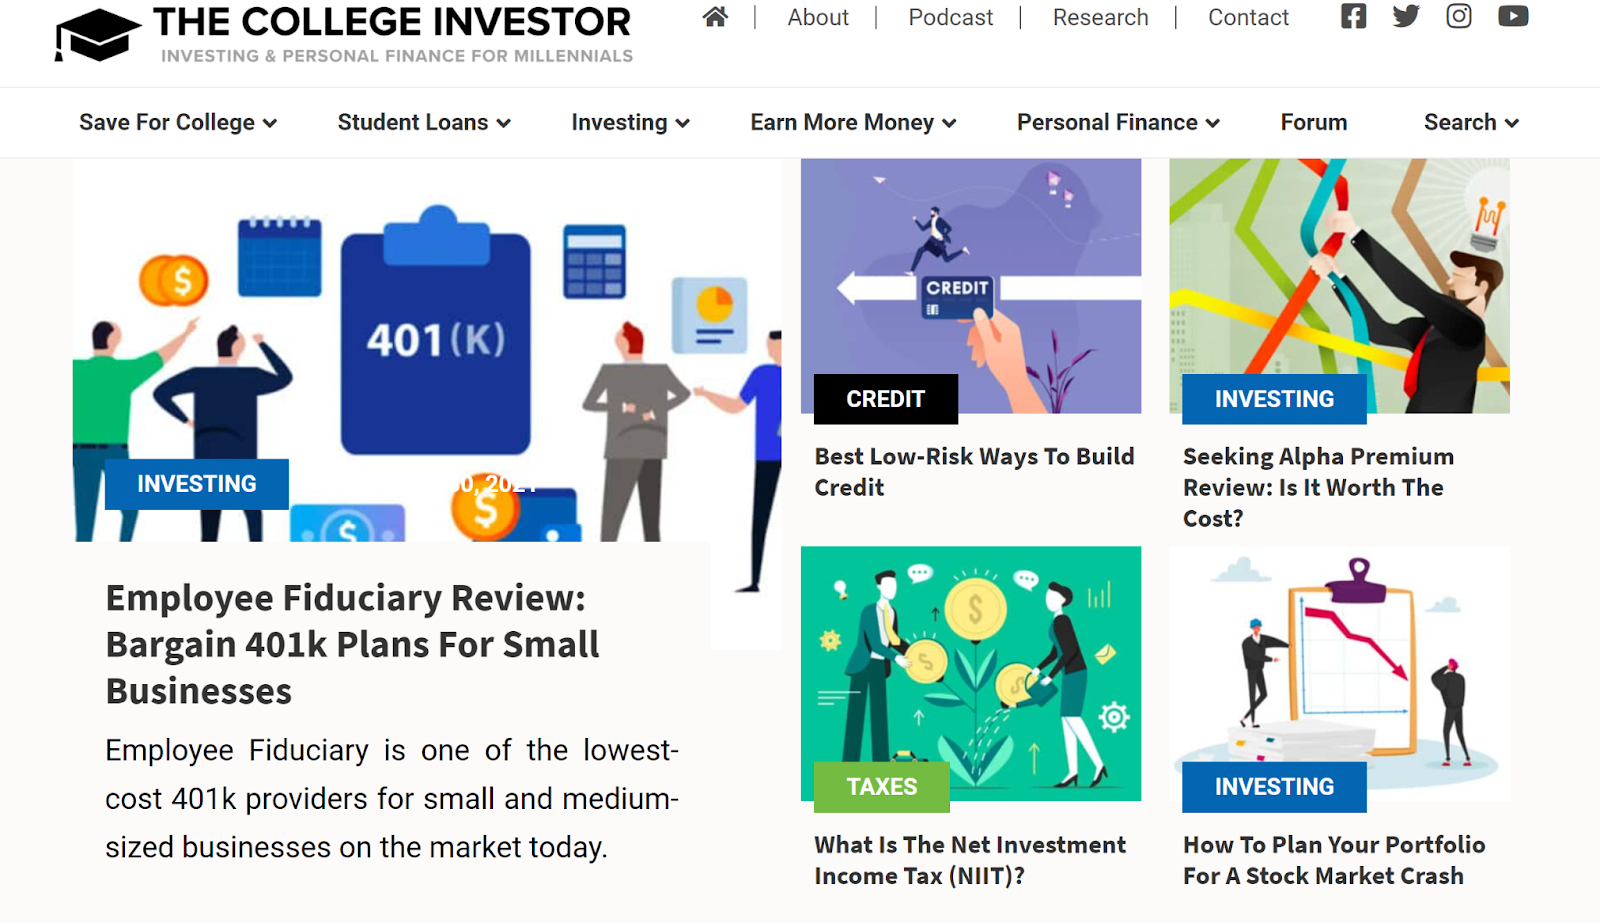 The College Investor blog